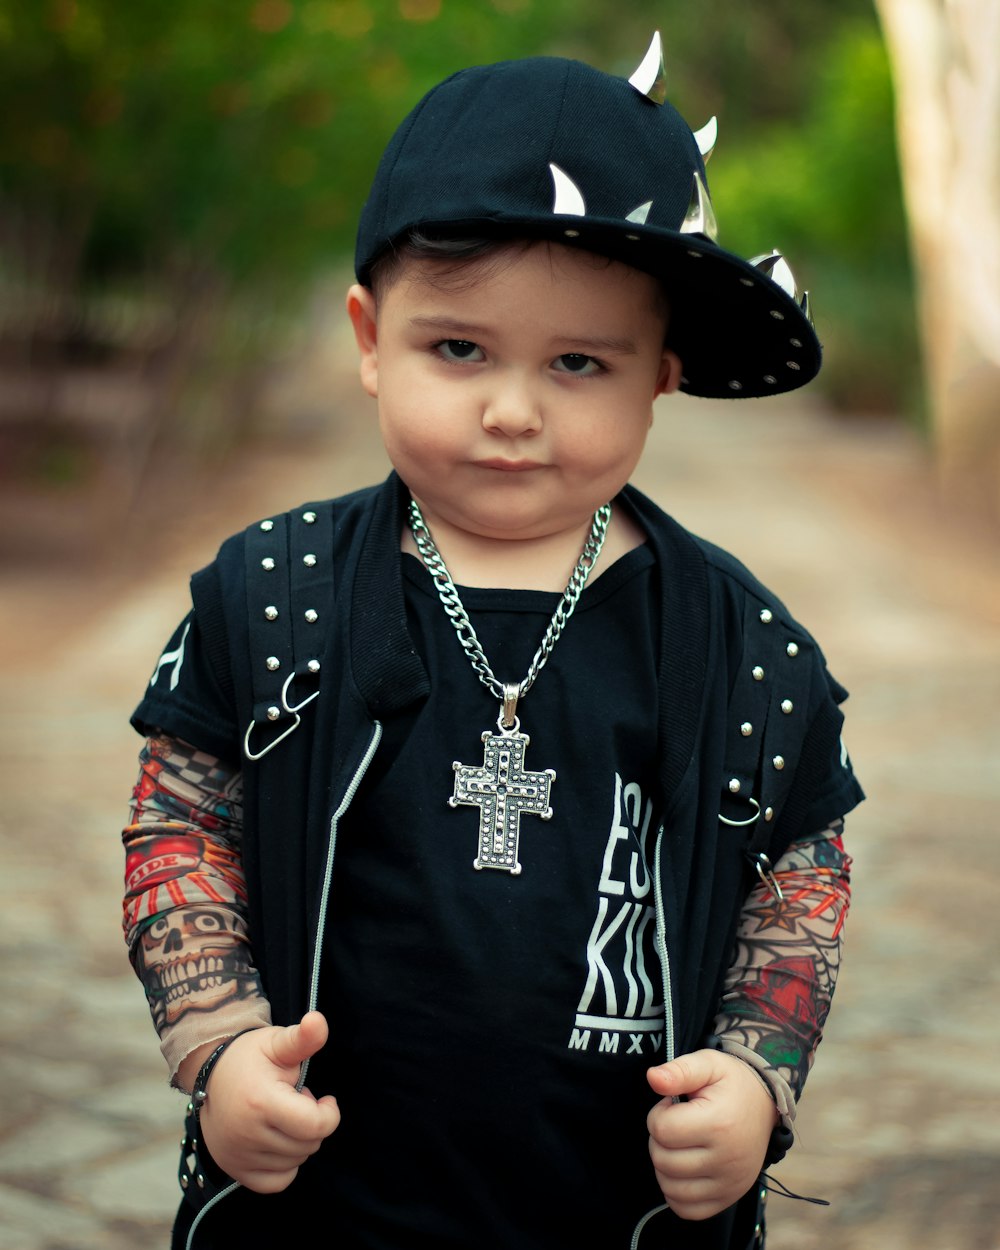 a little boy wearing a black hat and a black shirt